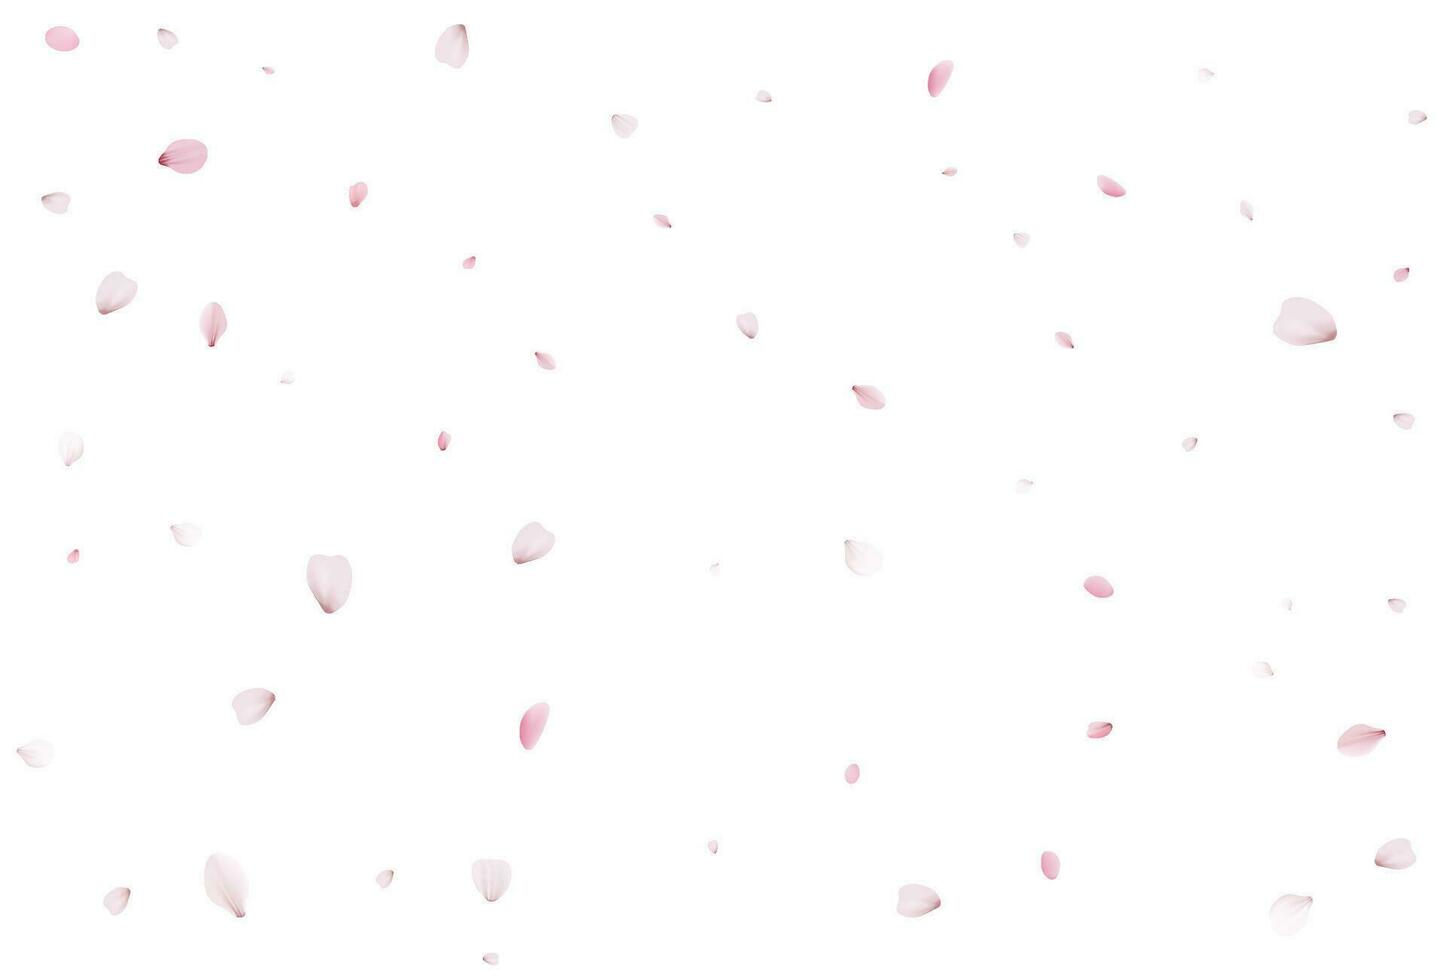 romantique Sakura Contexte. vecteur illustration.